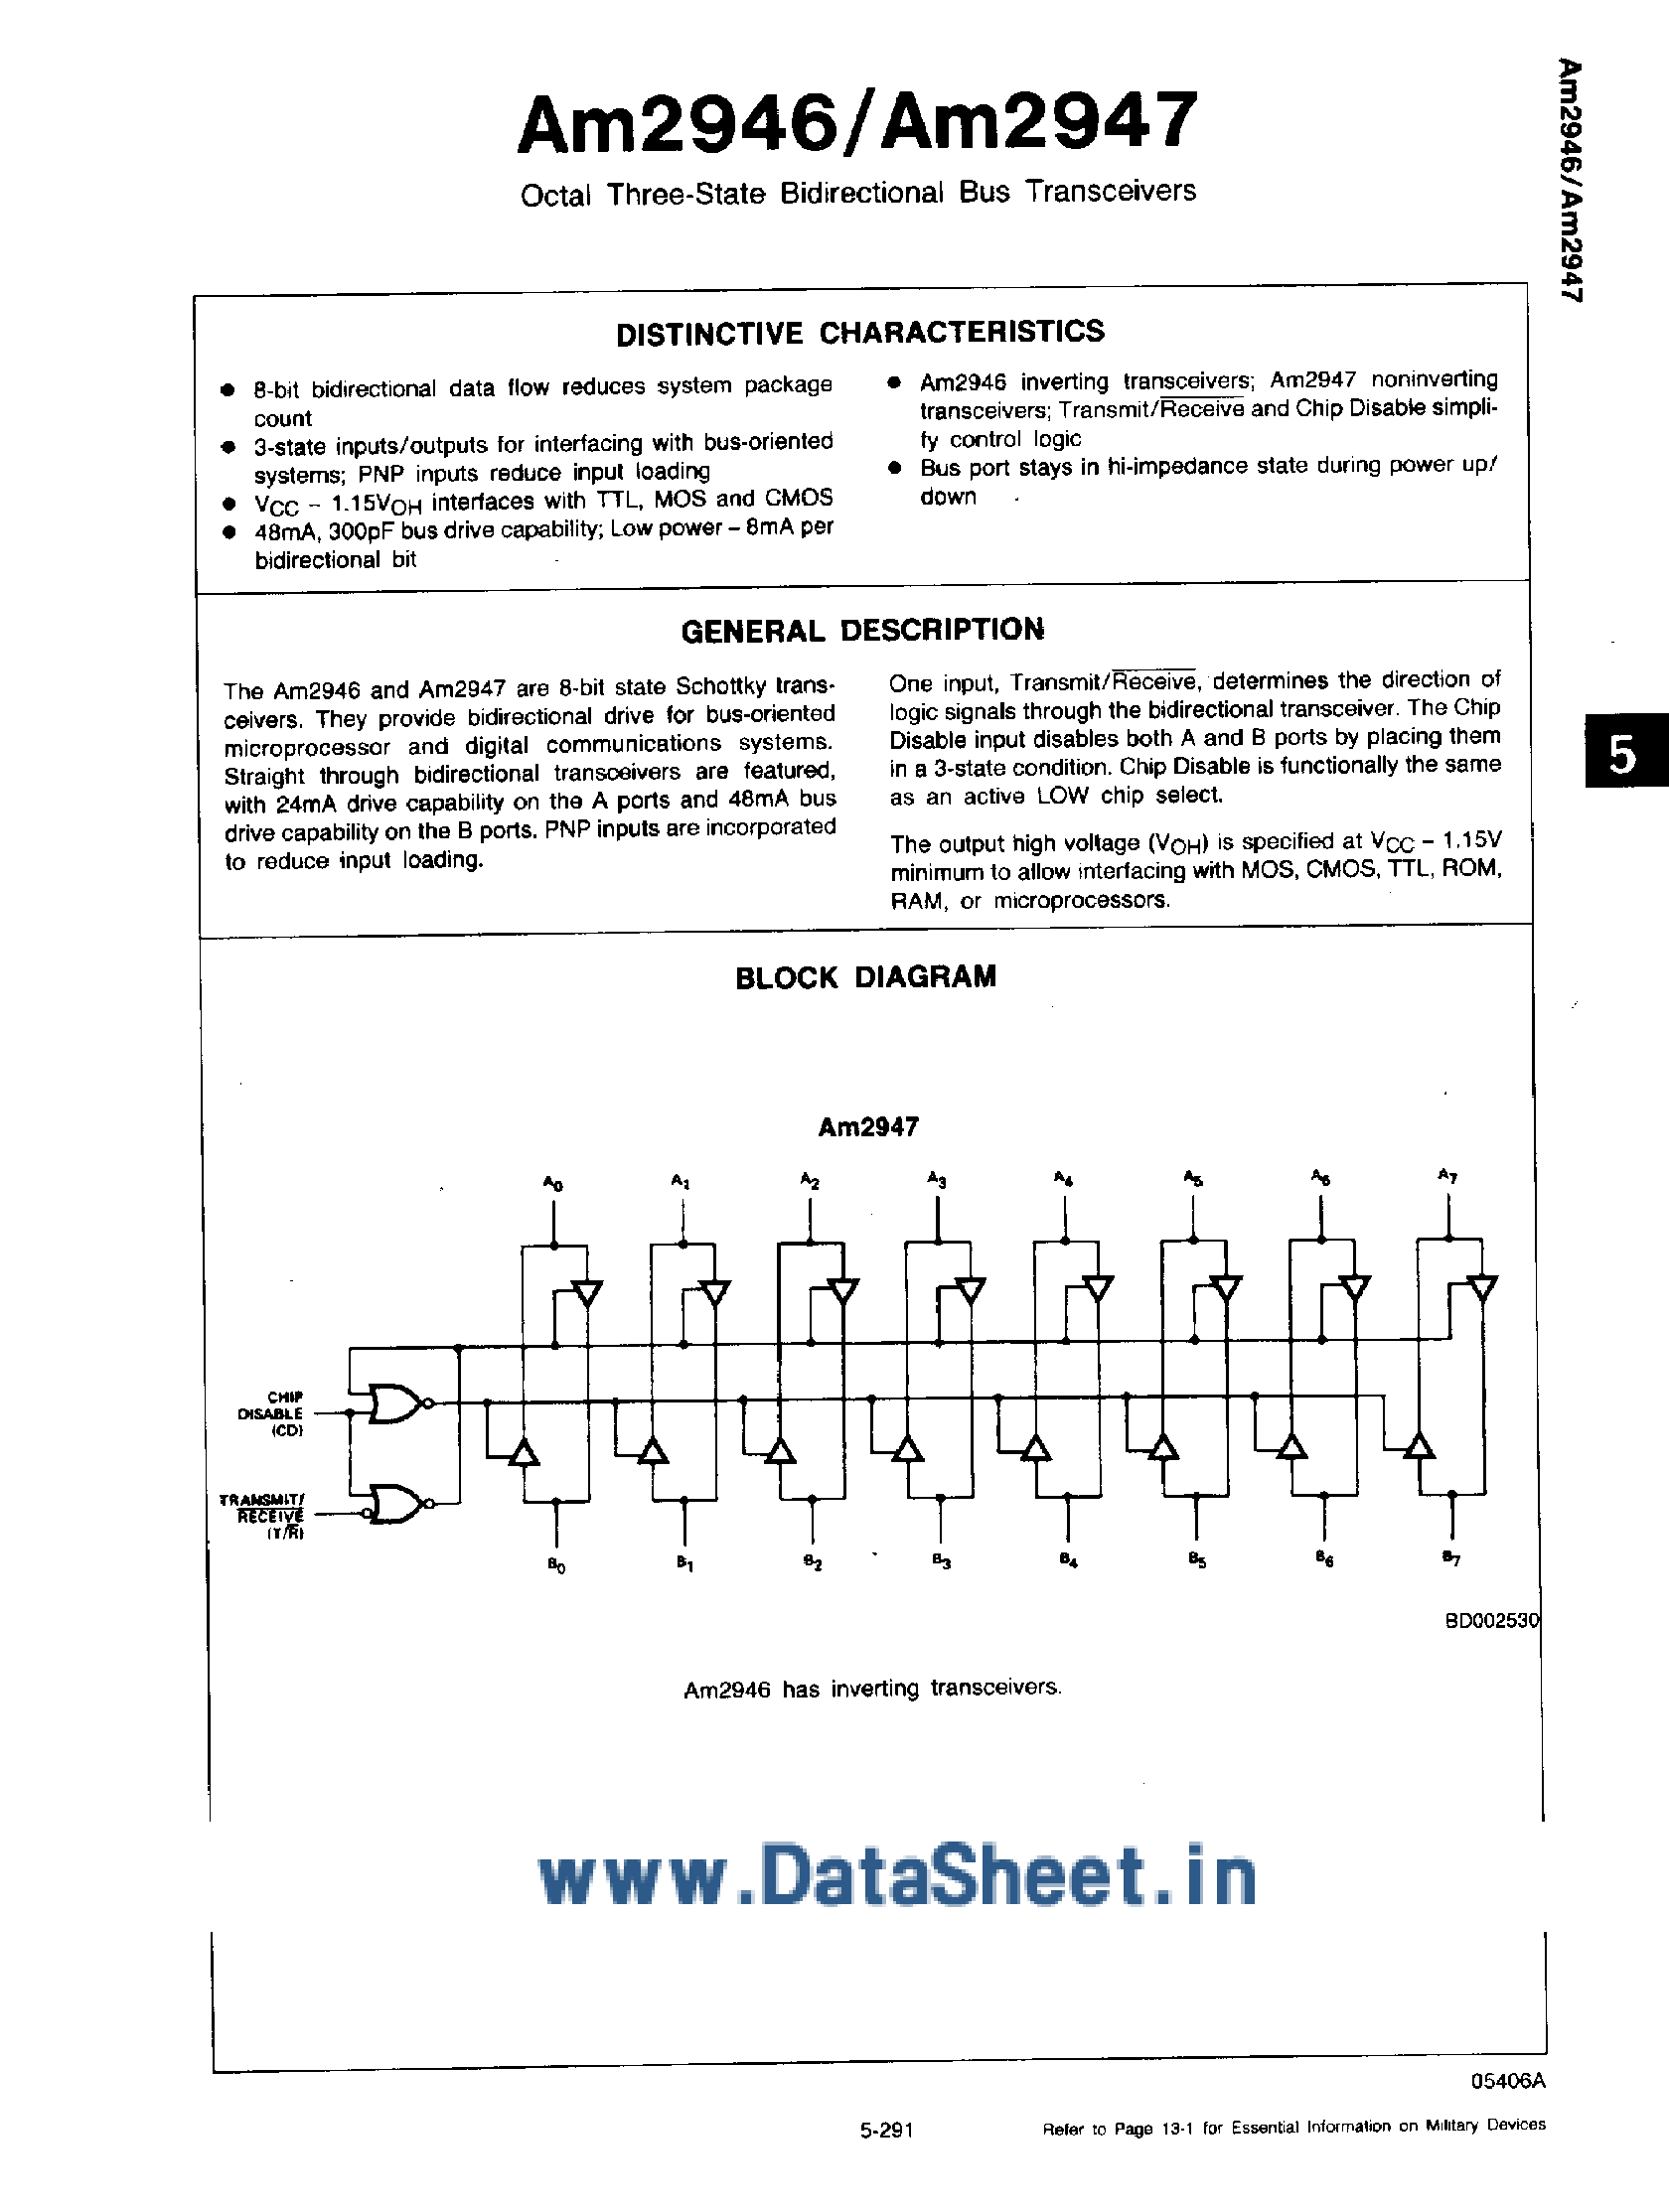 Даташит AM2946 - (AM2946 / AM2947) Octal 3-State Bidirectional Bus Transceivers страница 1